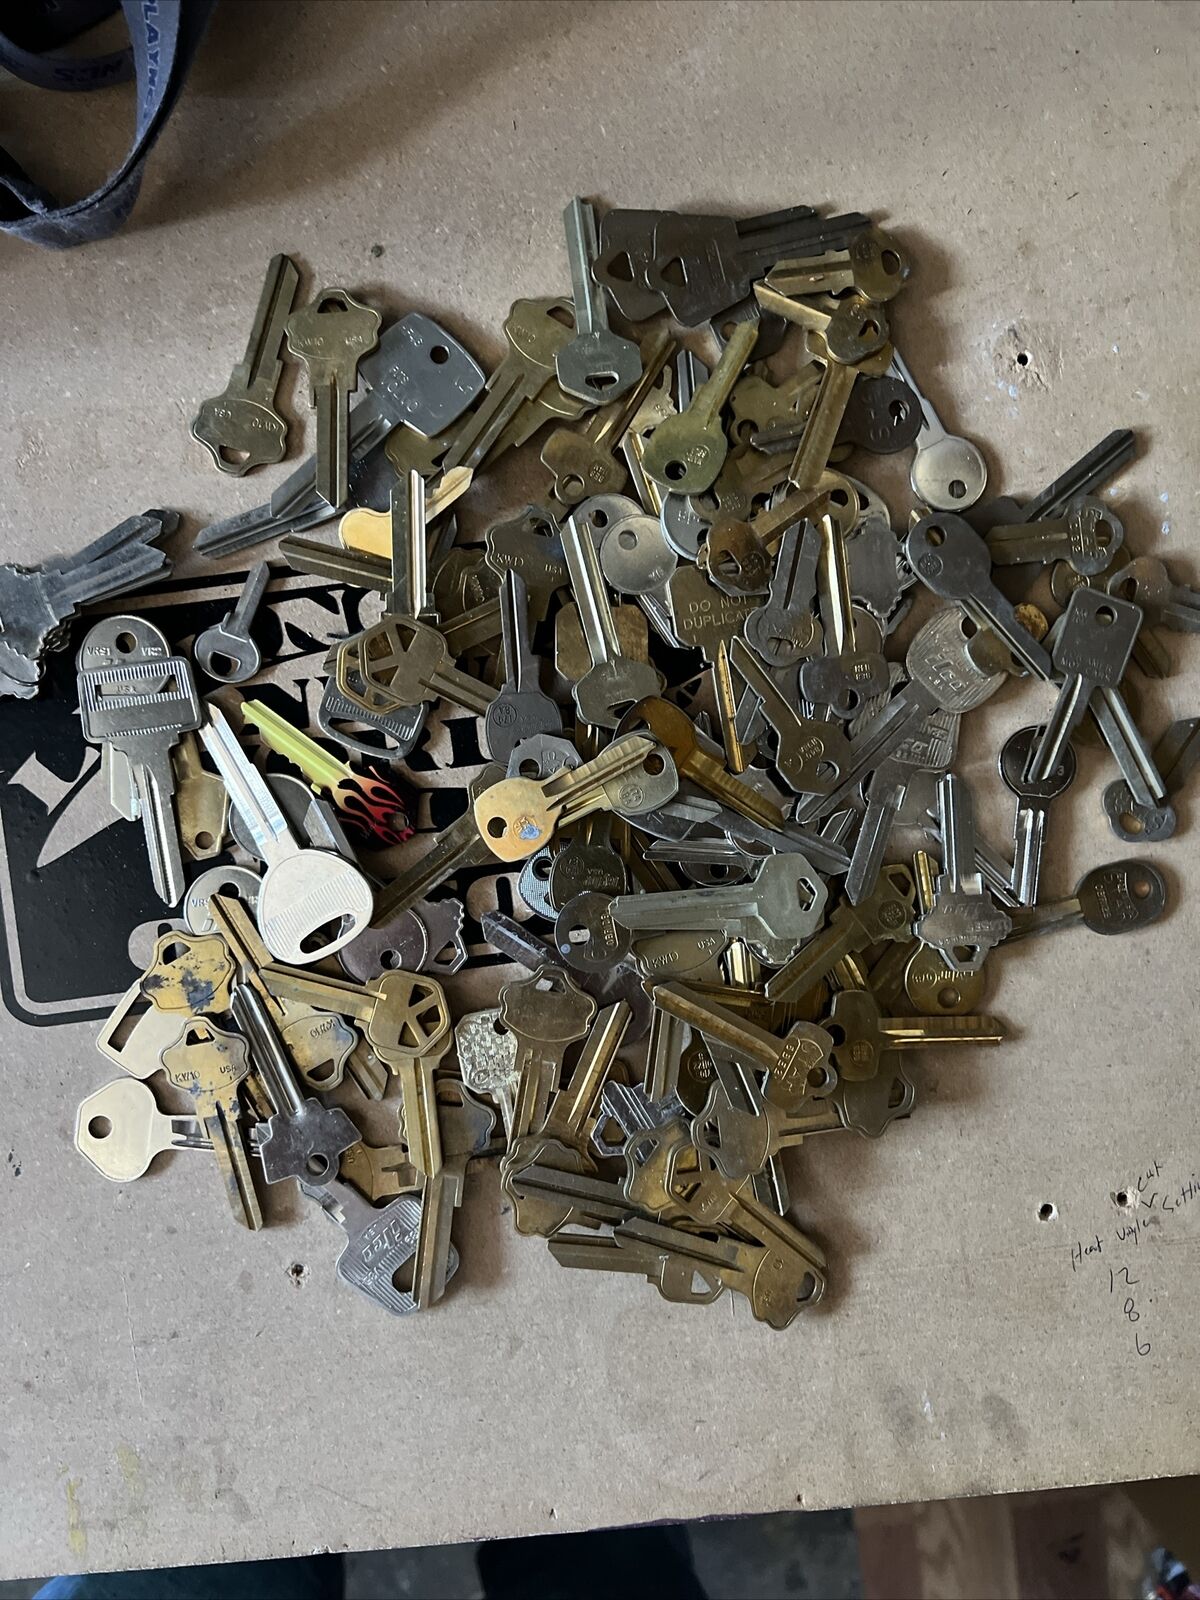 Lot Misc cut keys 1/2  Pound - residential, commercial, automotive,..